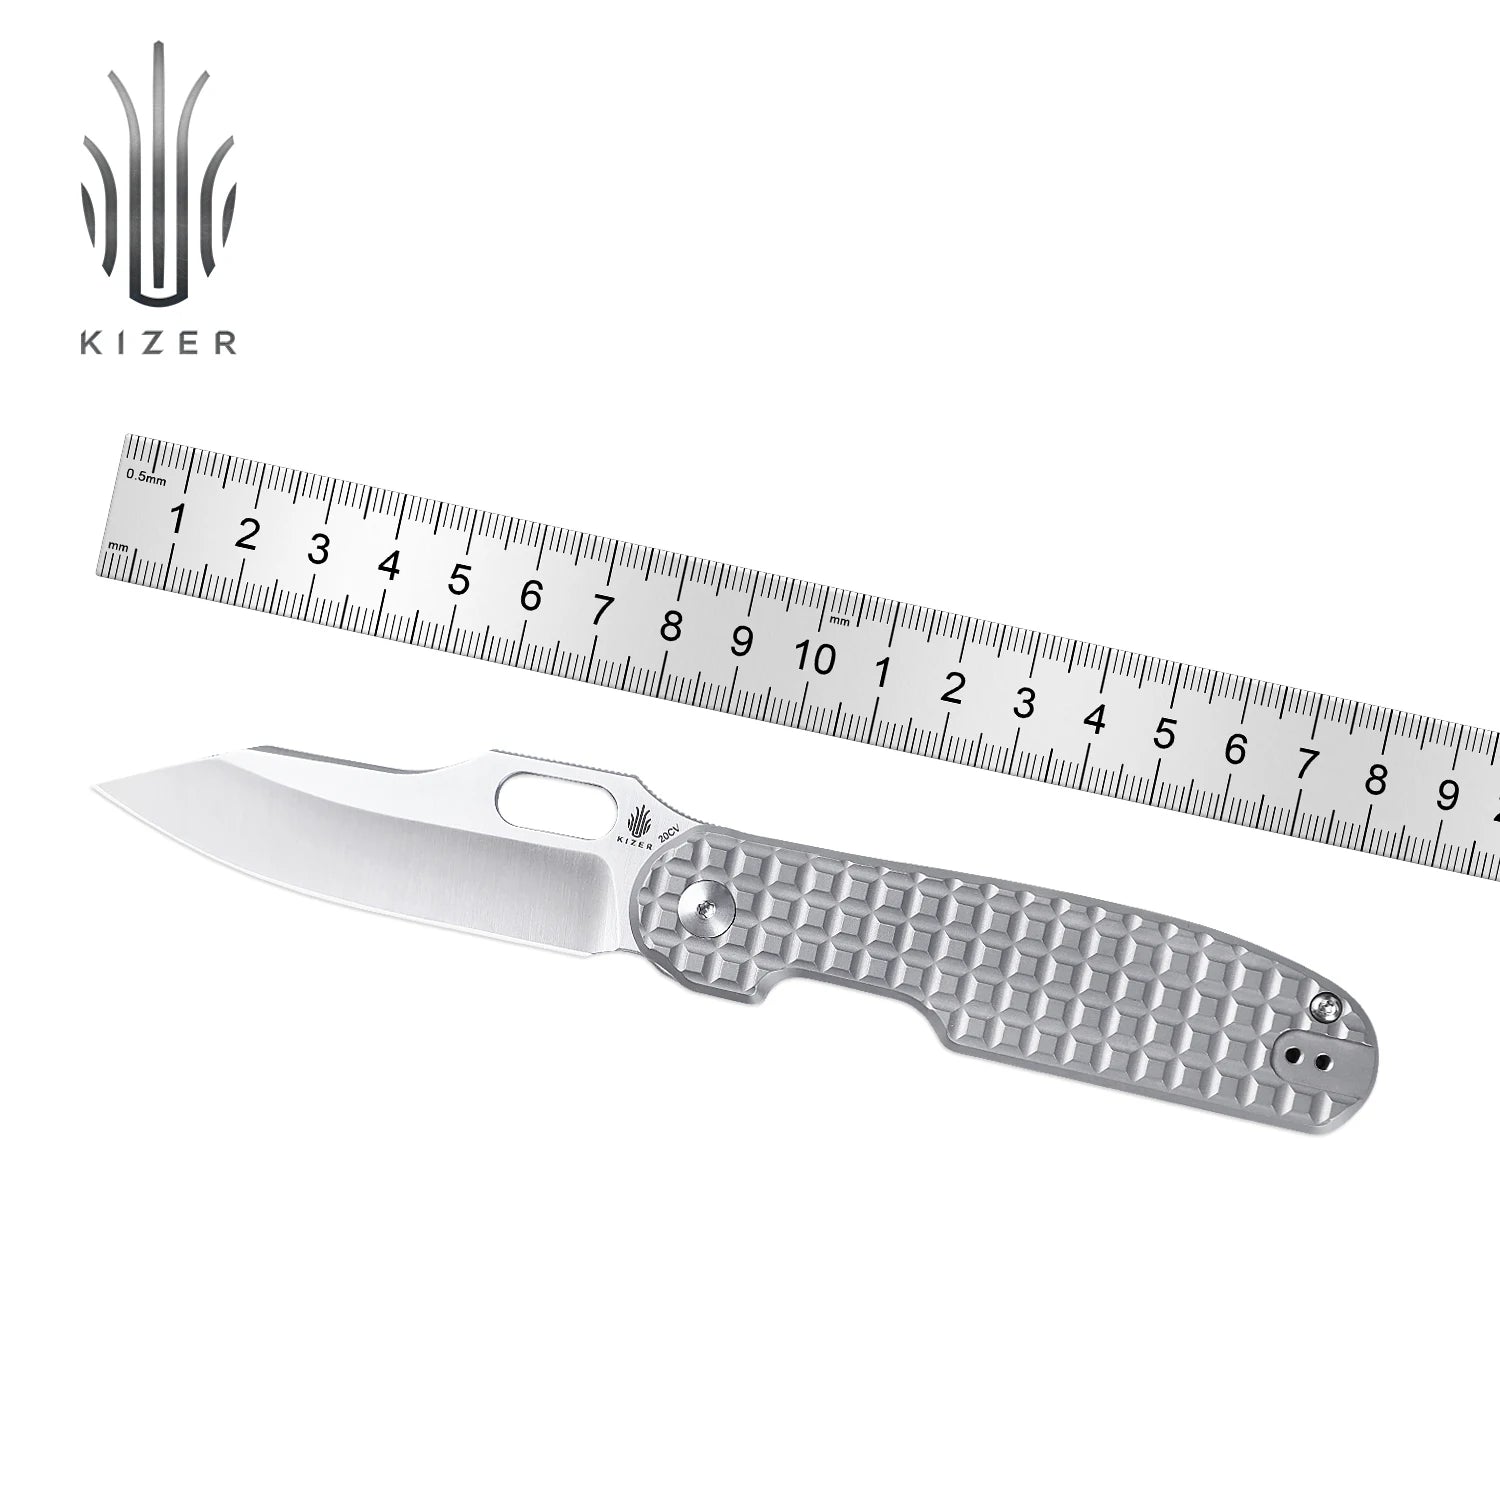 Kizer Folding Survival Knife, Cormorant Ki4562A1/A2/A3/A4/A5 Pocket Knife with S35VN/20CV Steel Blade & G10/Titanium Handle